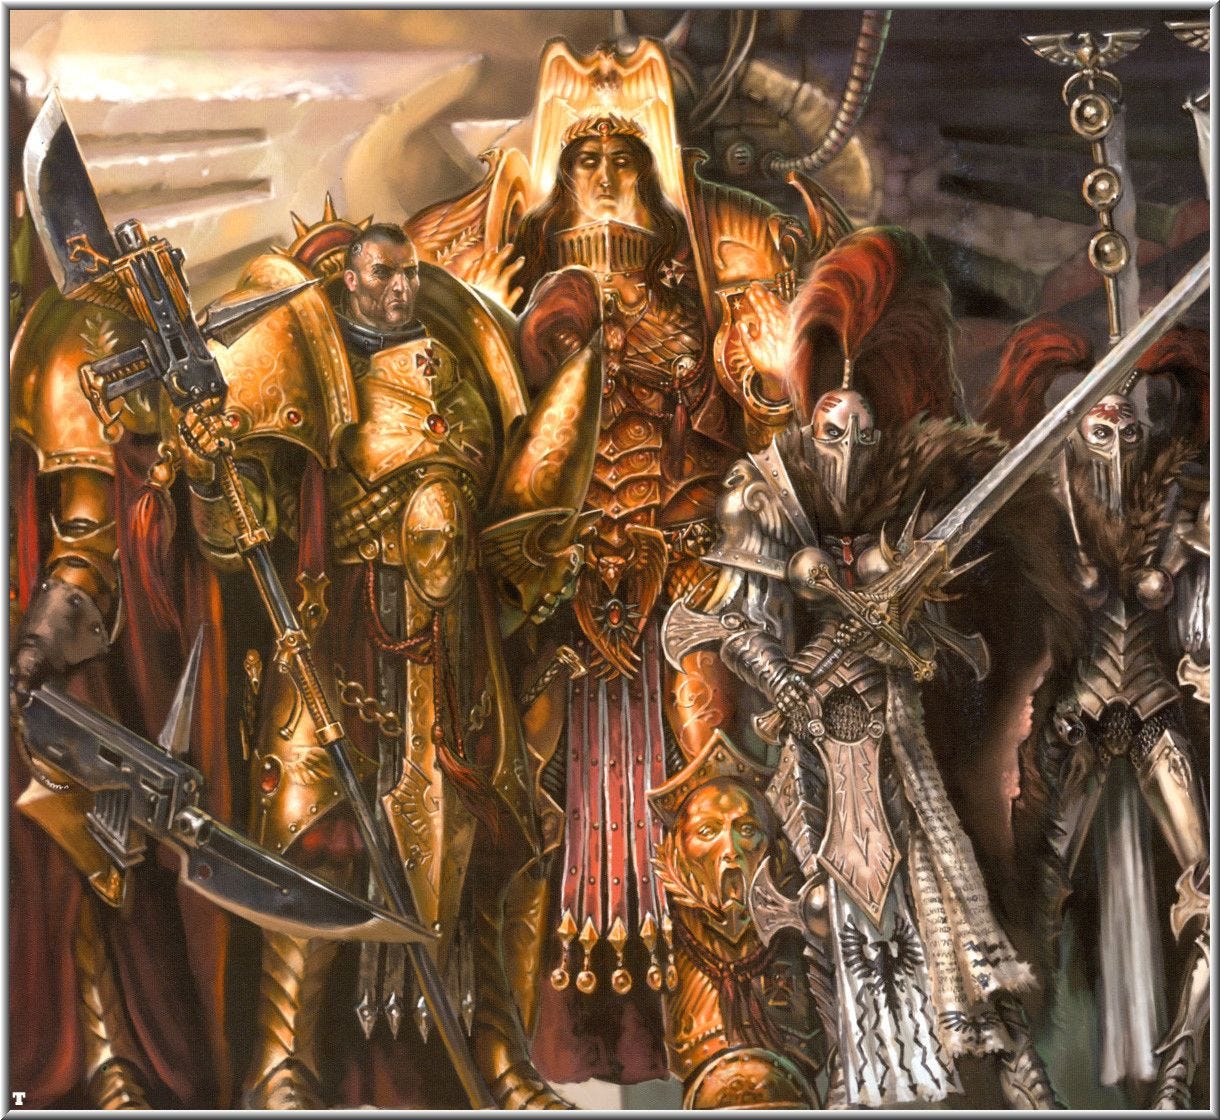 Warhammer 40k Art + More: "The Emperor of Man + Retinue"